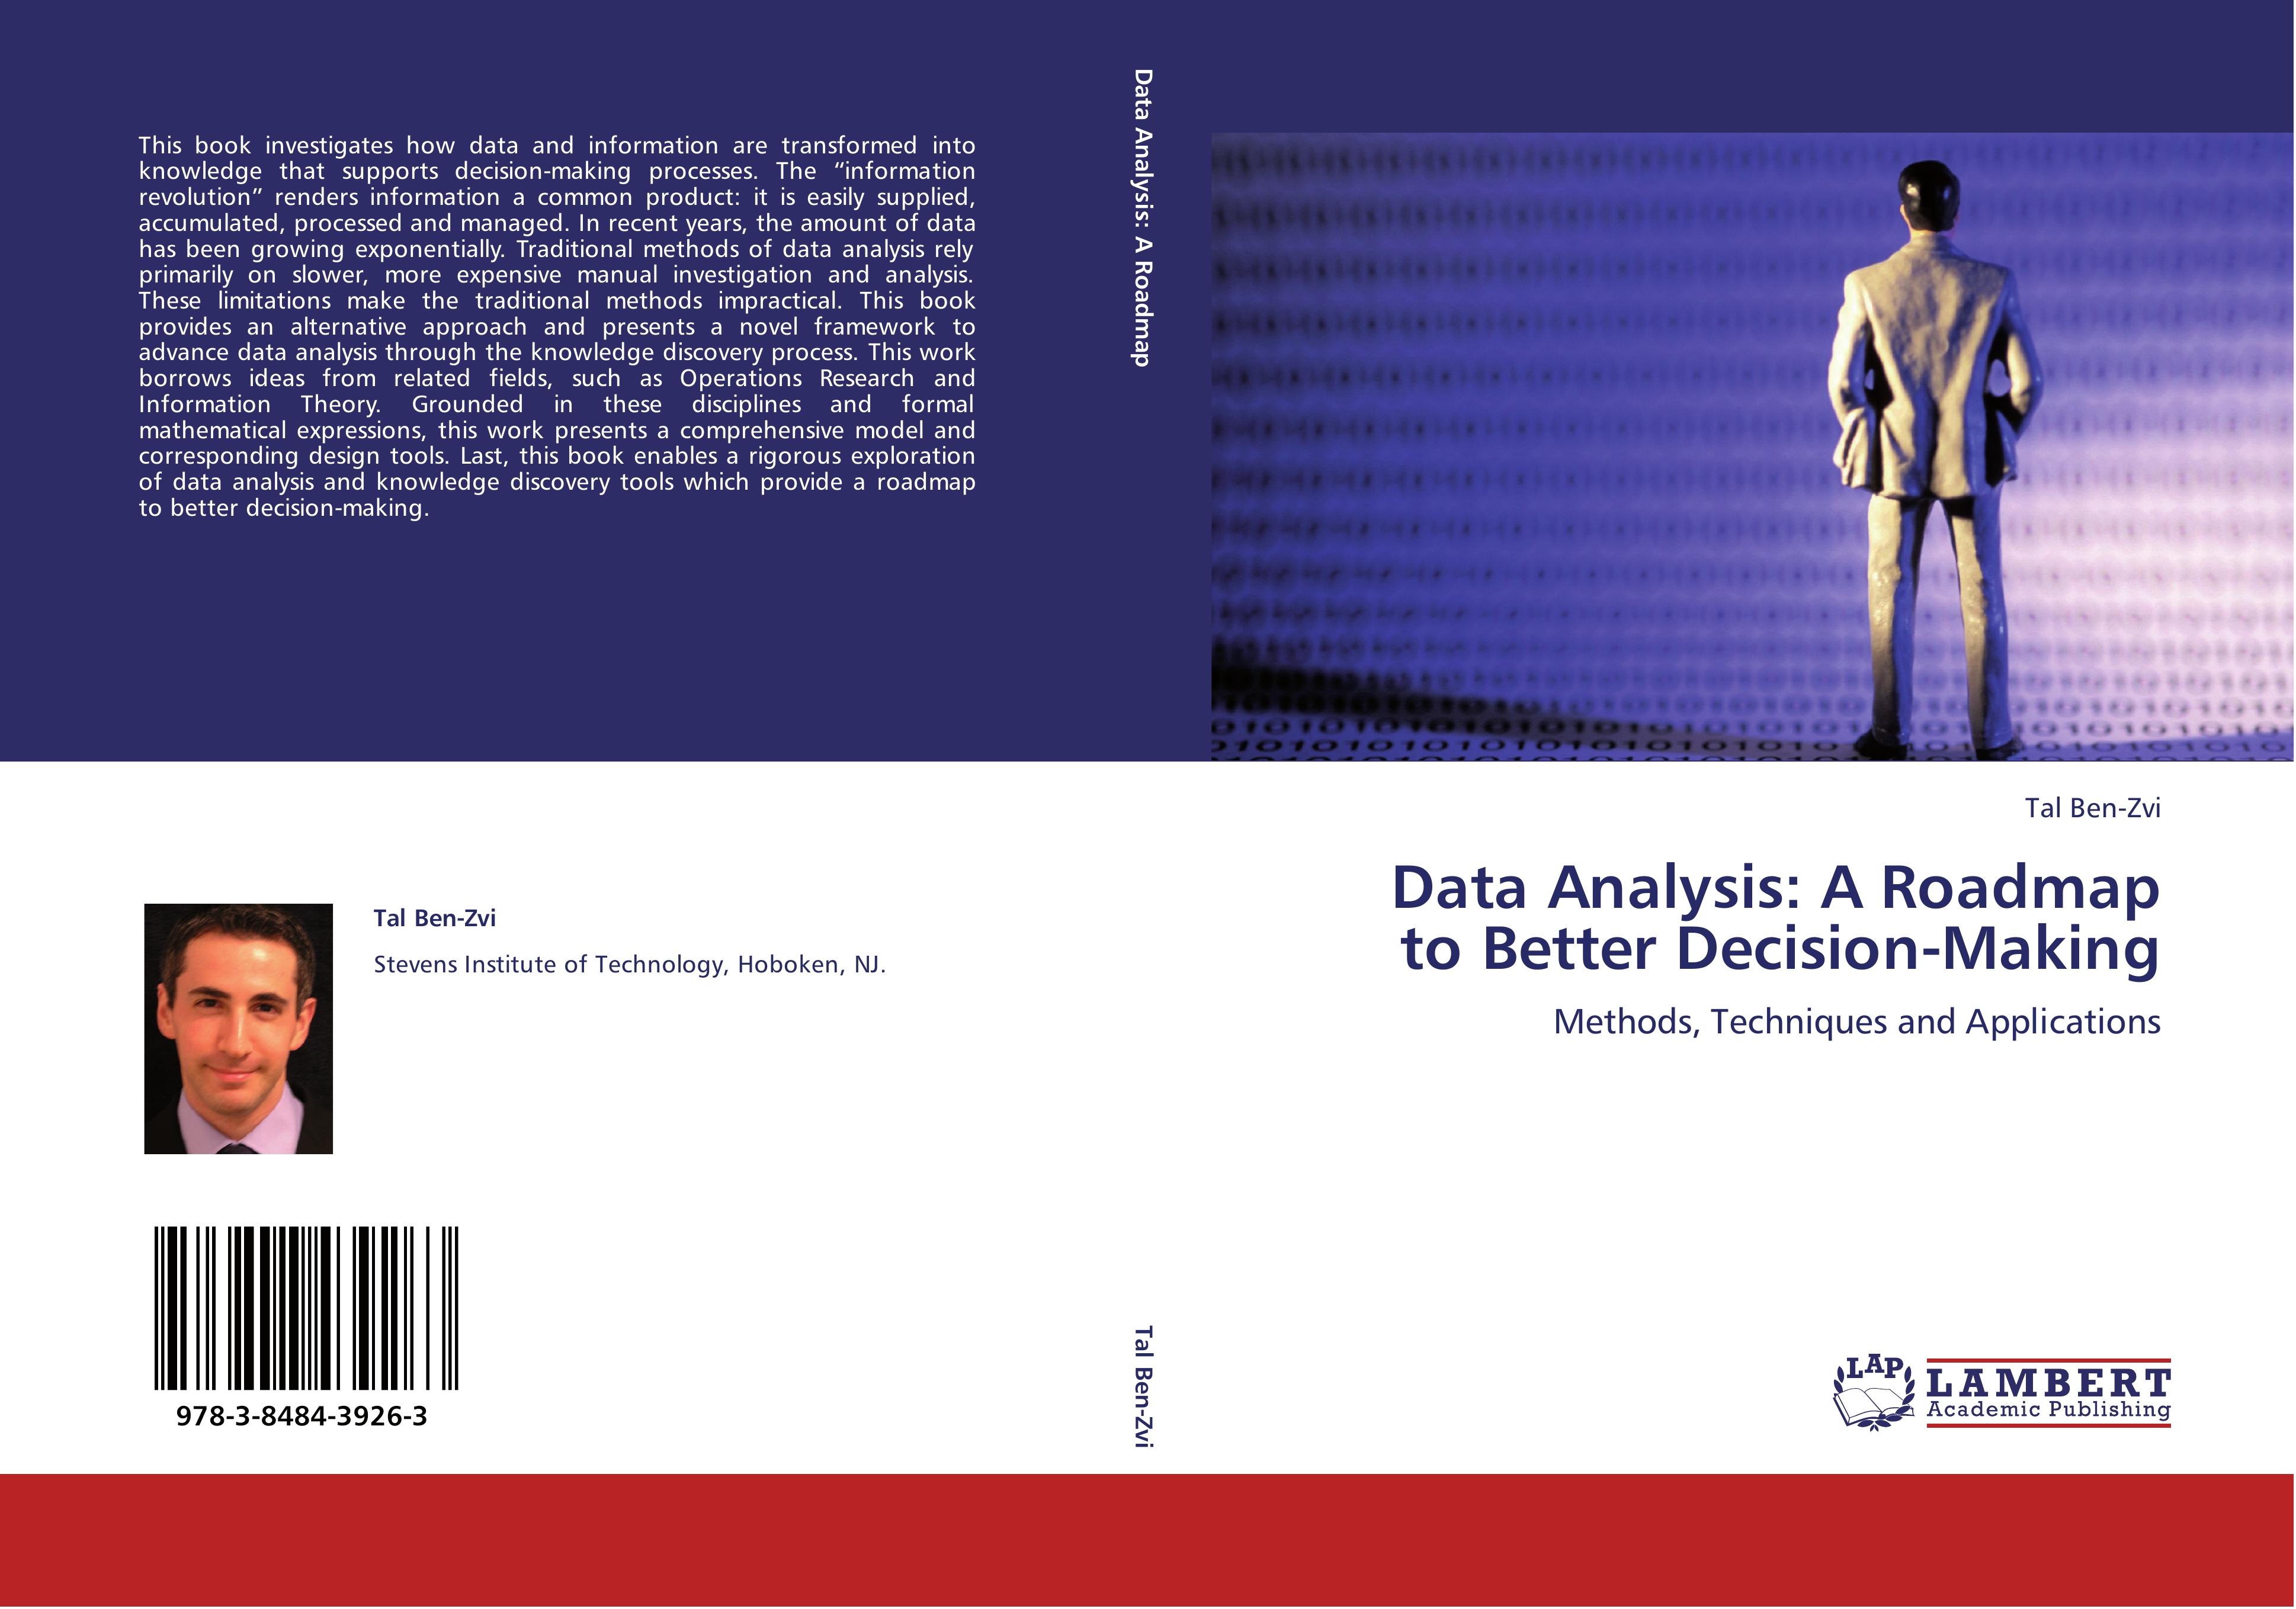 Data Analysis: A Roadmap to Better Decision-Making / Methods, Techniques and Applications / Tal Ben-Zvi / Taschenbuch / Paperback / 304 S. / Englisch / 2012 / LAP LAMBERT Academic Publishing - Ben-Zvi, Tal